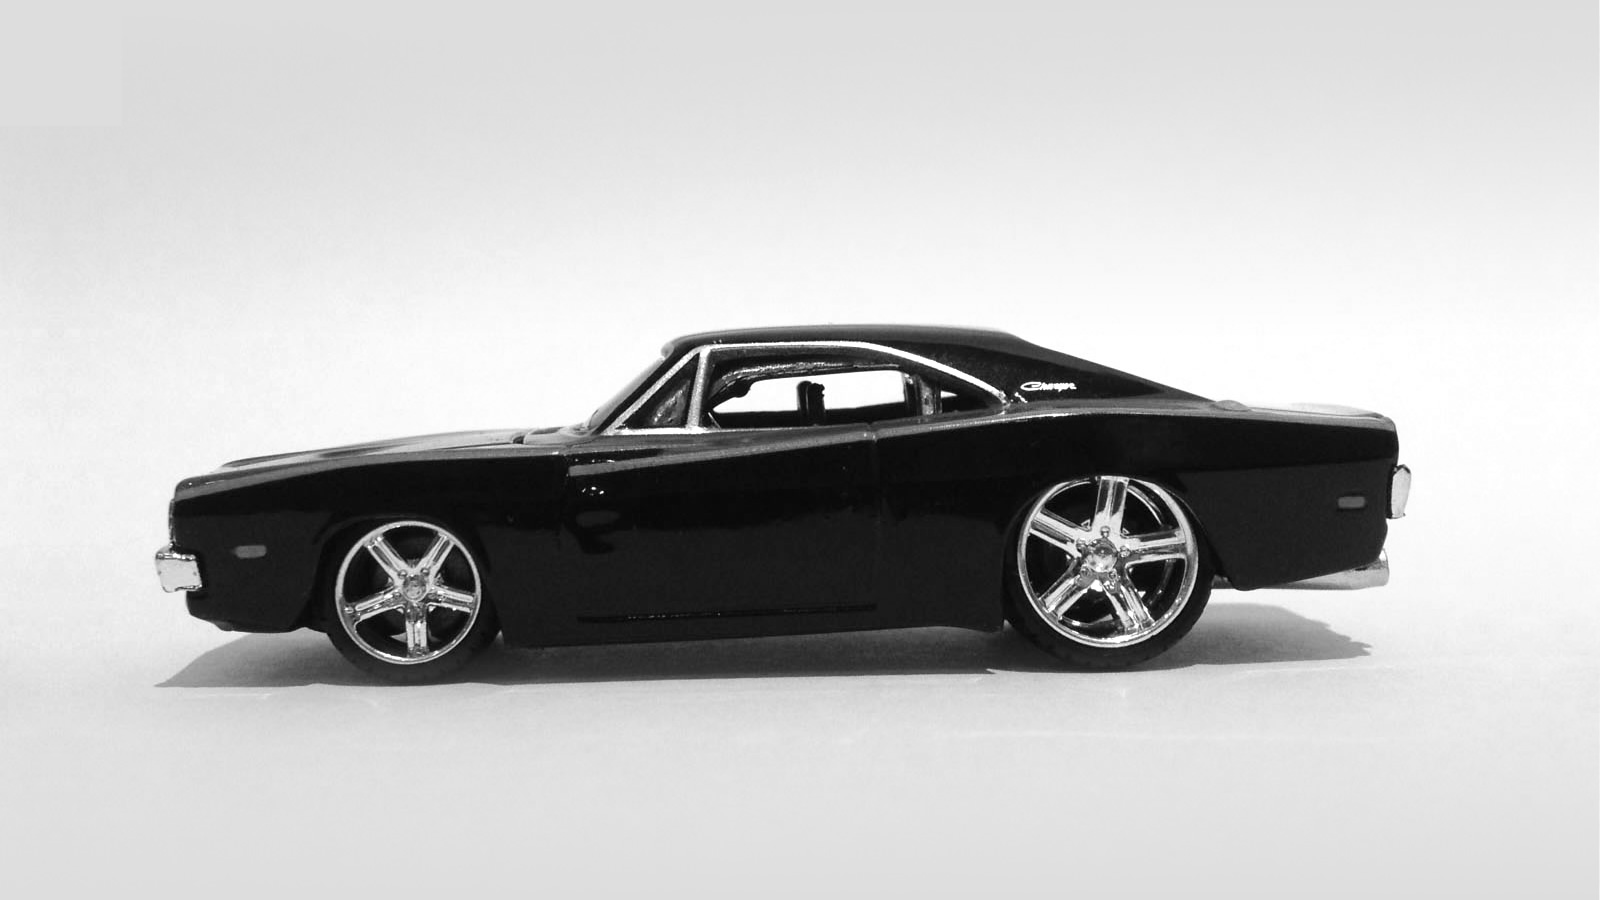 A Matchbox model of a muscle car